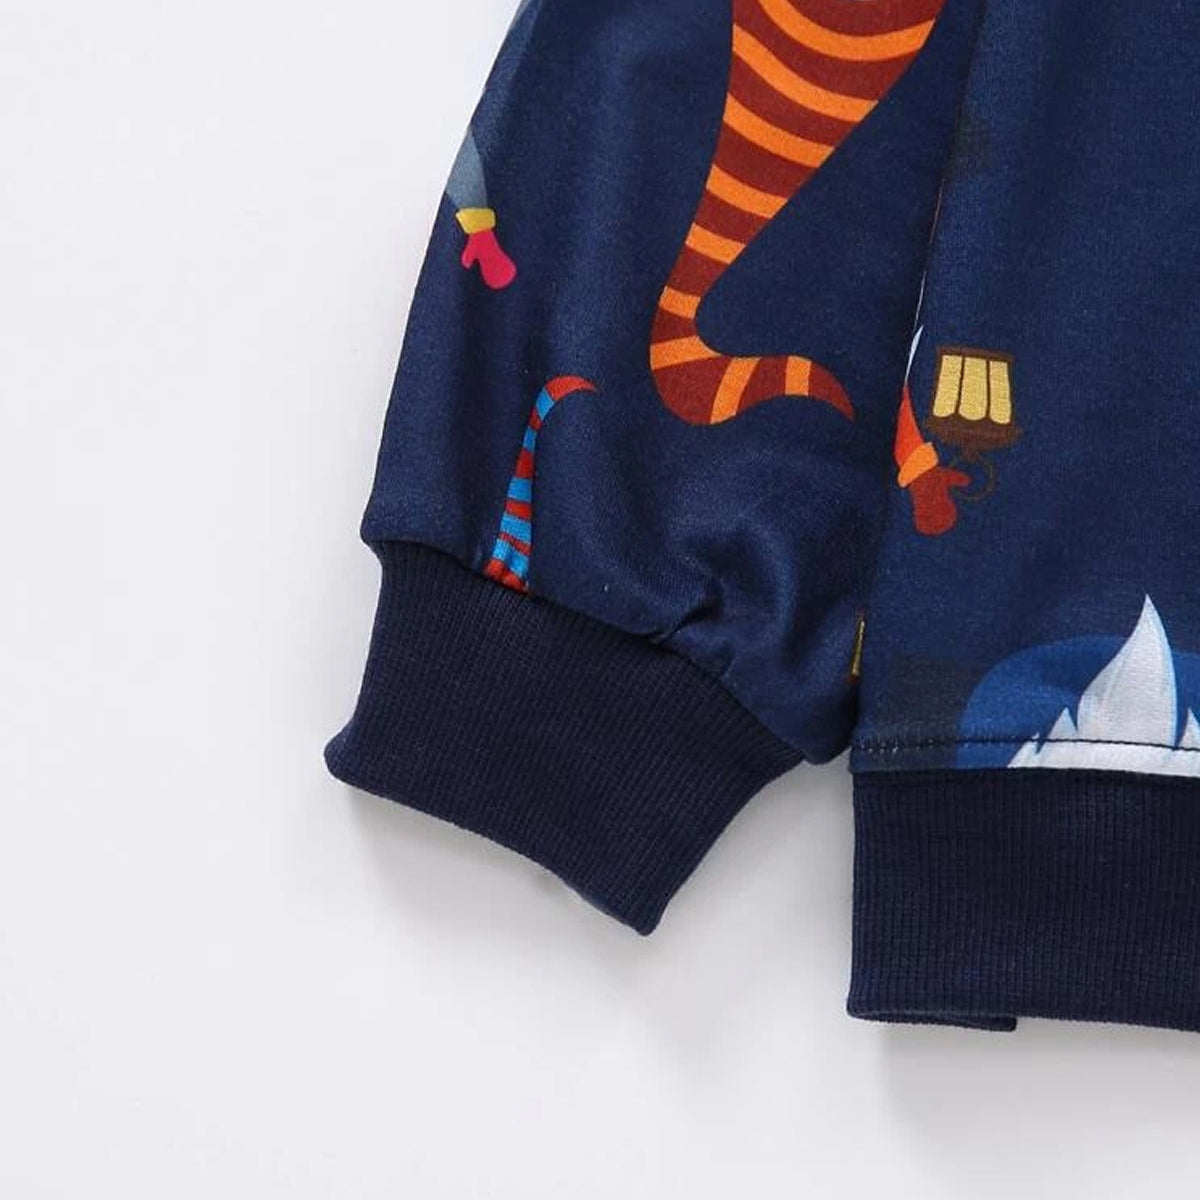 Venutaloza Boy's Letter Color Block & Round Neck Stripe & Sewing Patterns (Combo Pack of 3) T-shirt For Boy's.